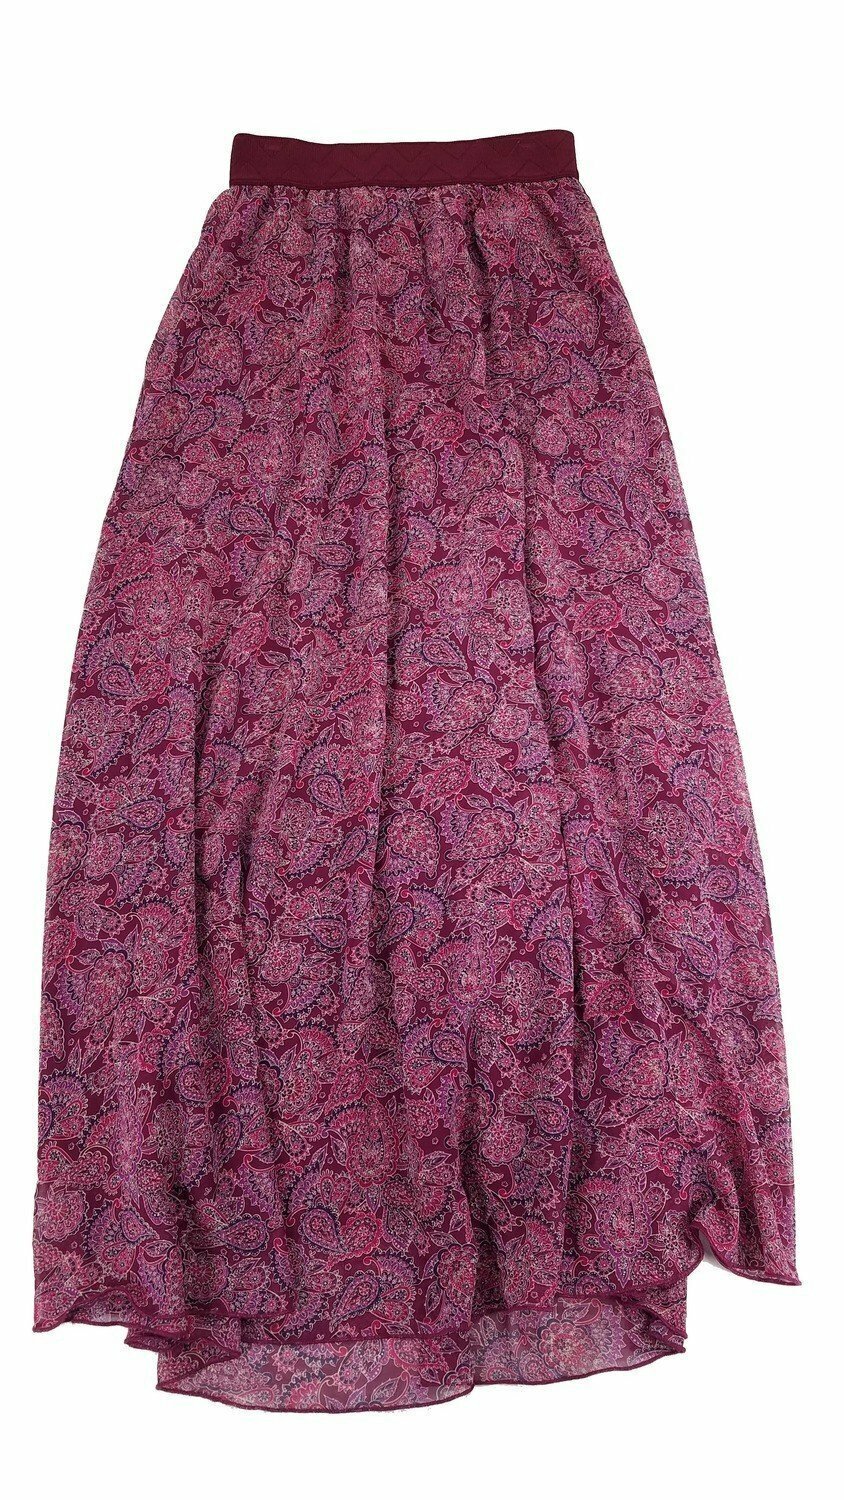 LuLaRoe Lucy Paisley XX-Small XXS Floor Length Women's Skirt fits sizes Sizes 00-0